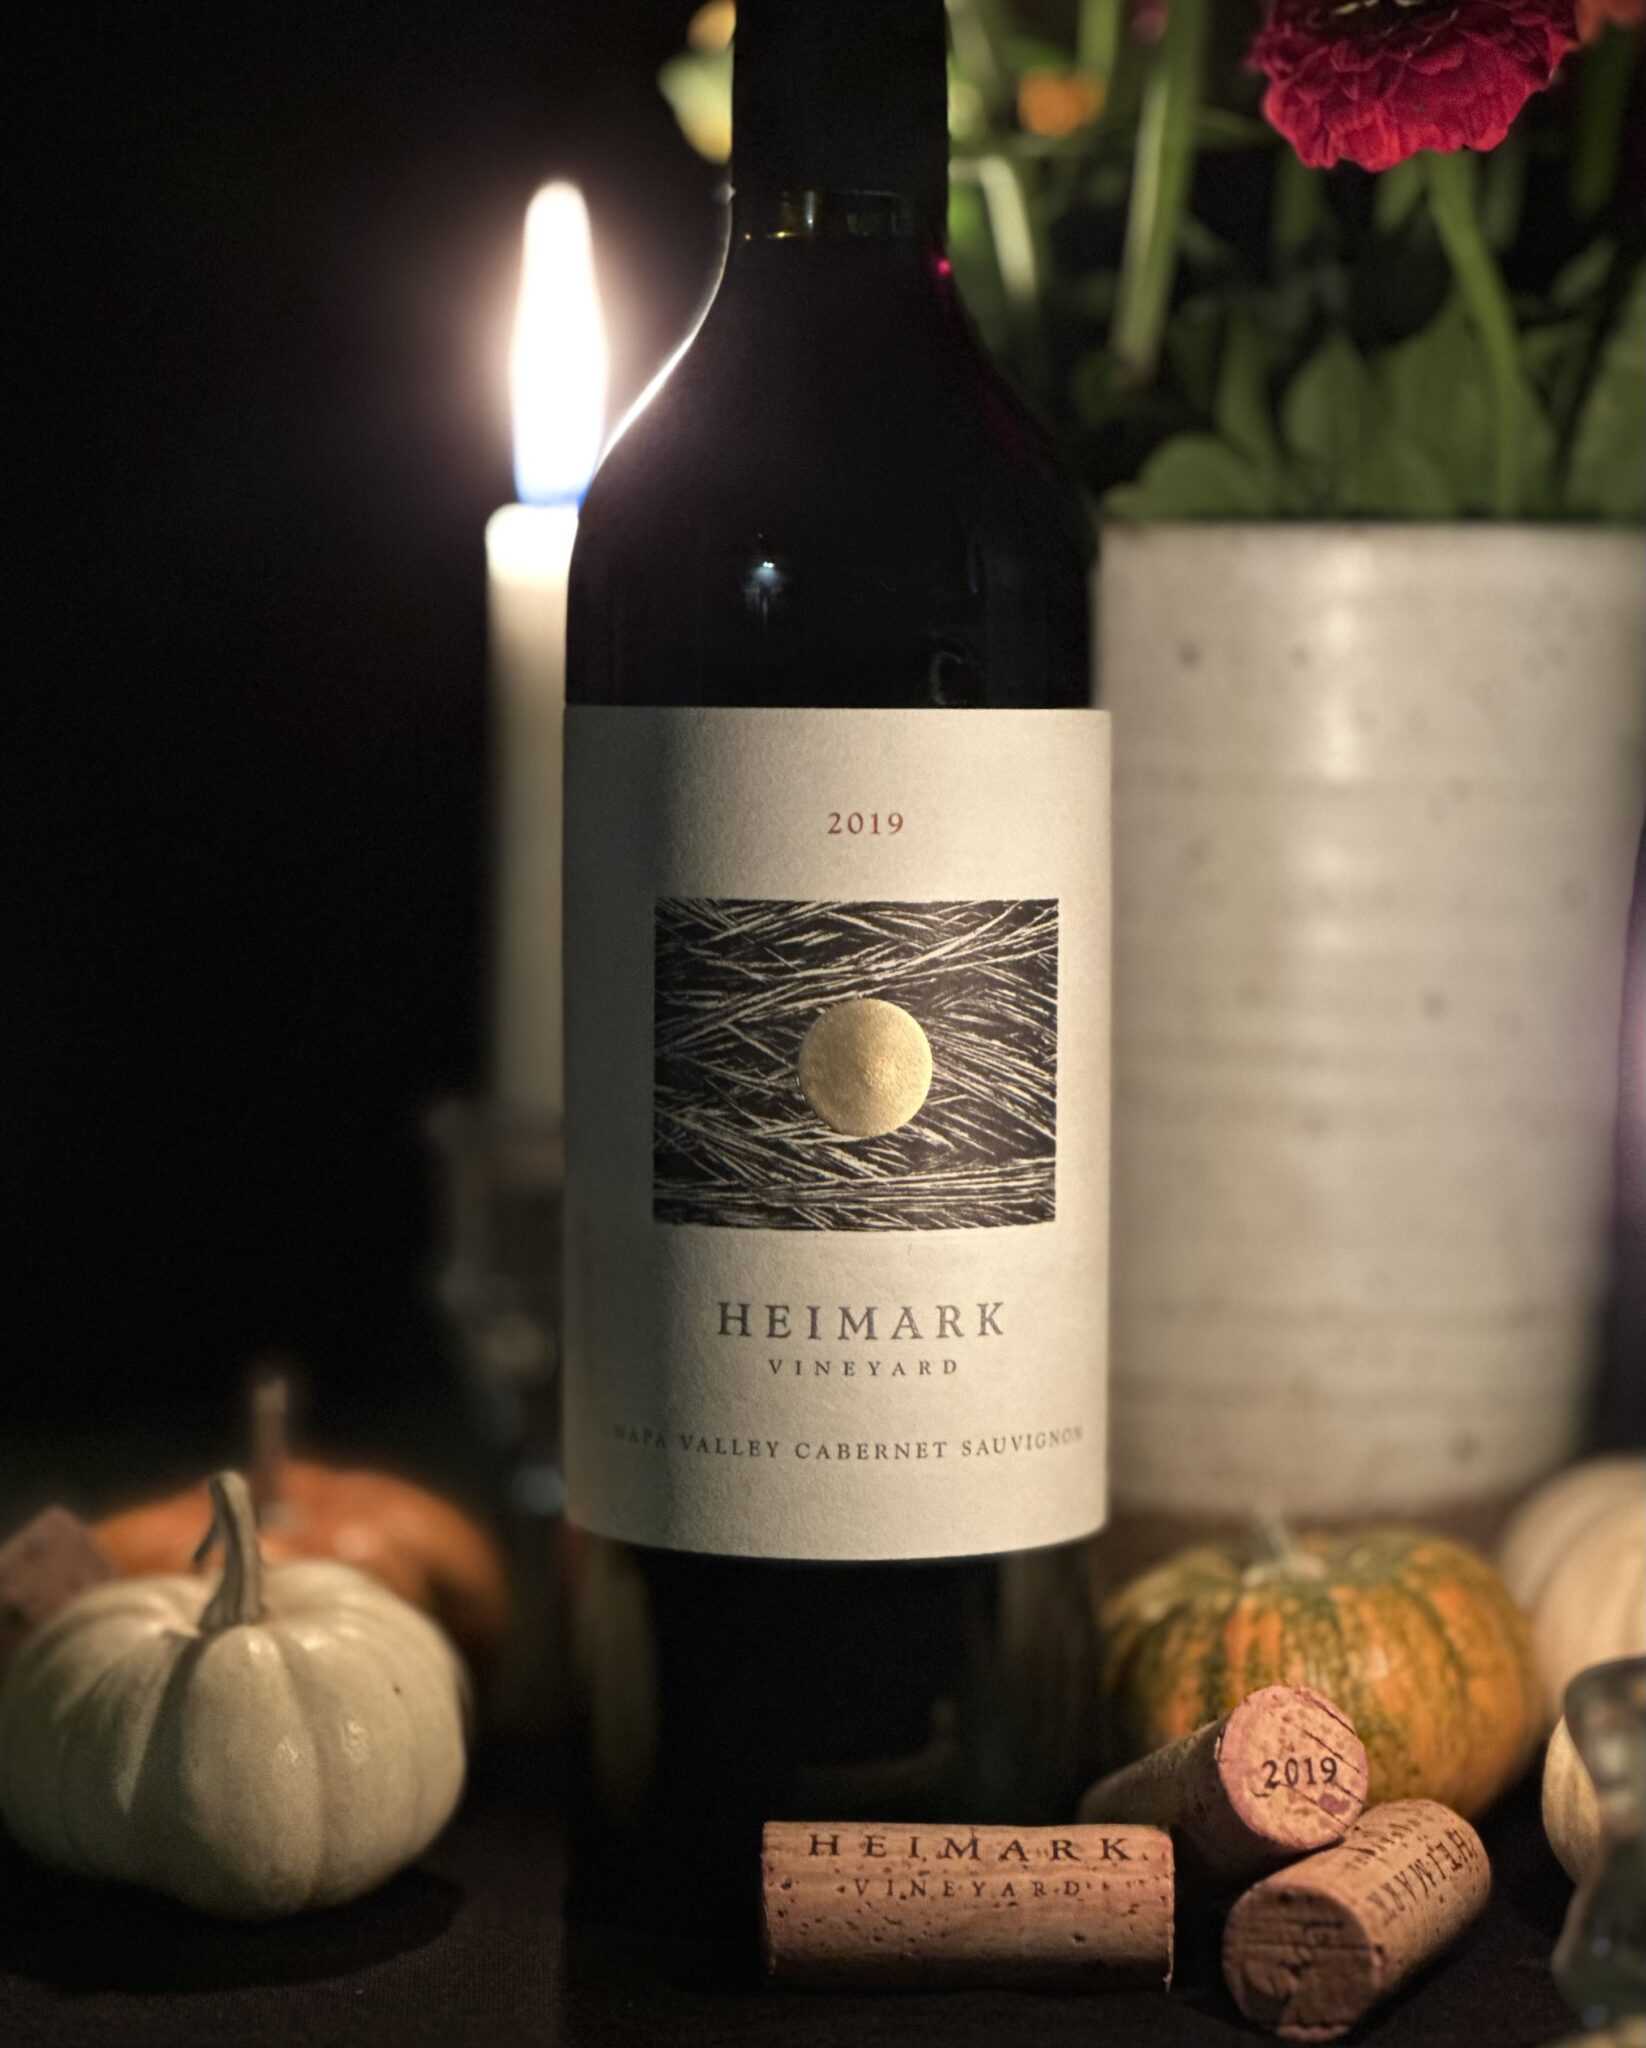 Heimark Vineyard Cabernet Sauvignon 2019 bottle on candlelit table with pumpkins and Heimark corks